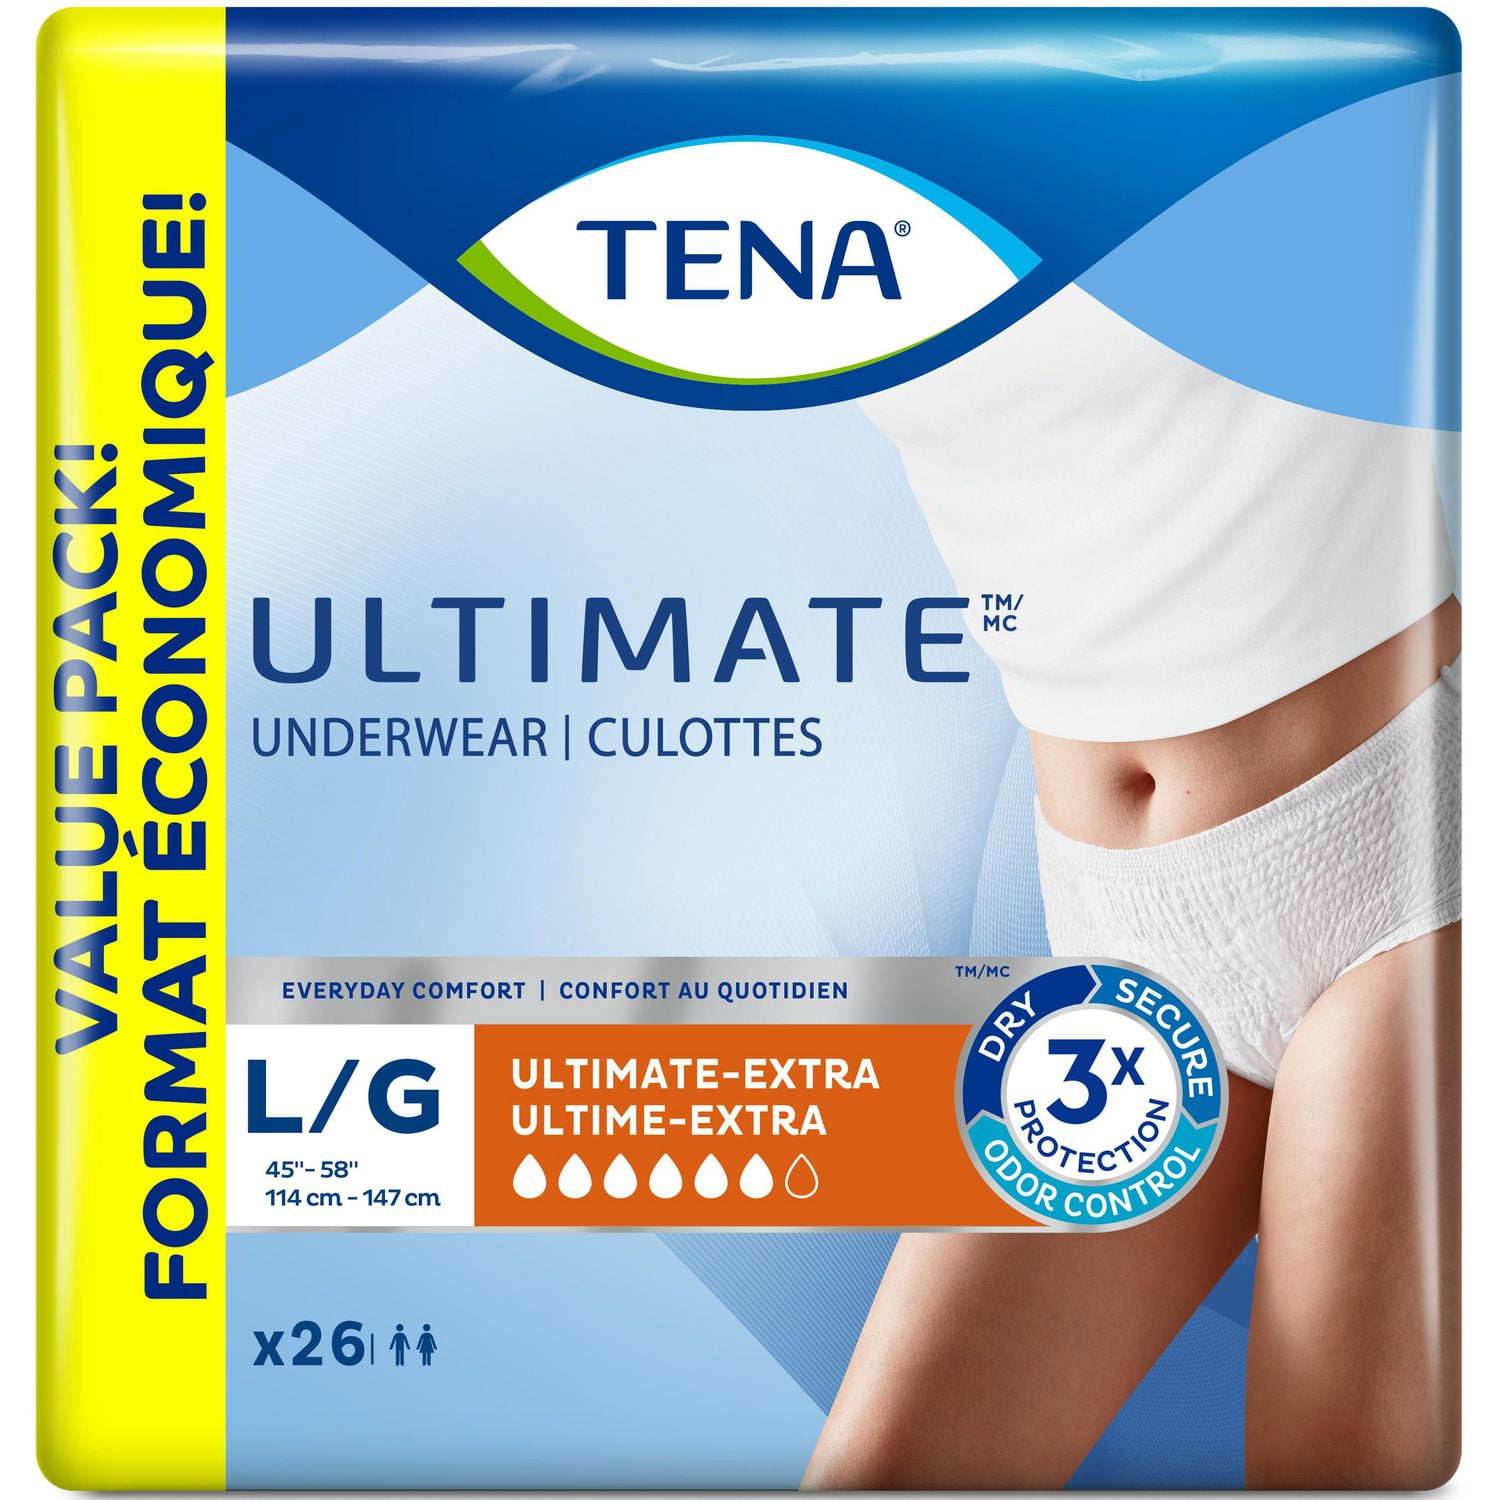 FREE Tena Underwear Sample Kit!